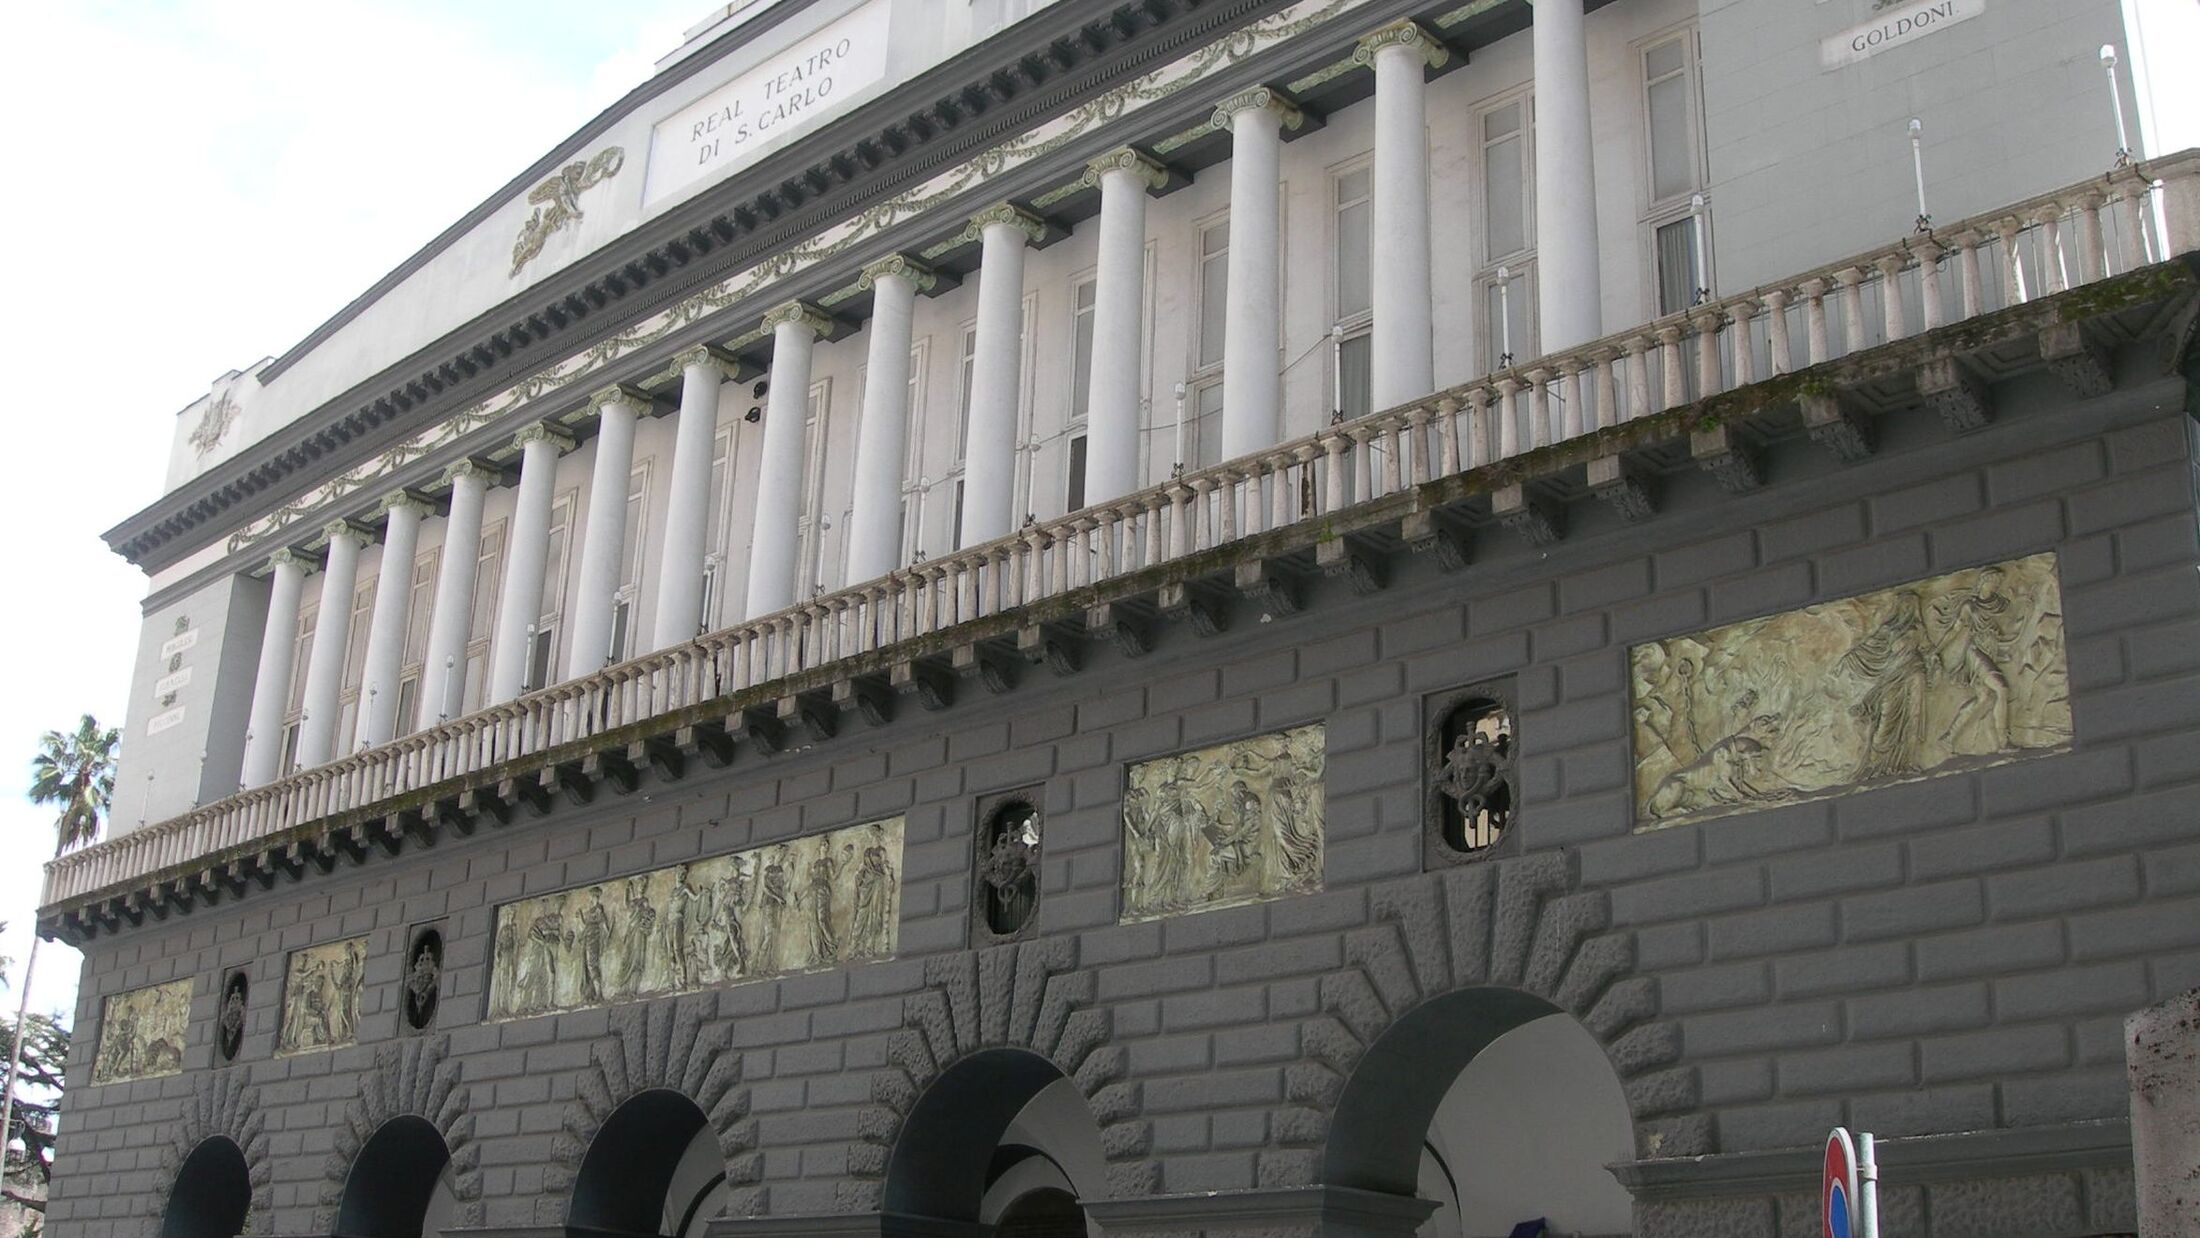 Naples â€“ Teatro San Carlo theatre facade in neoclassical style famous for opera